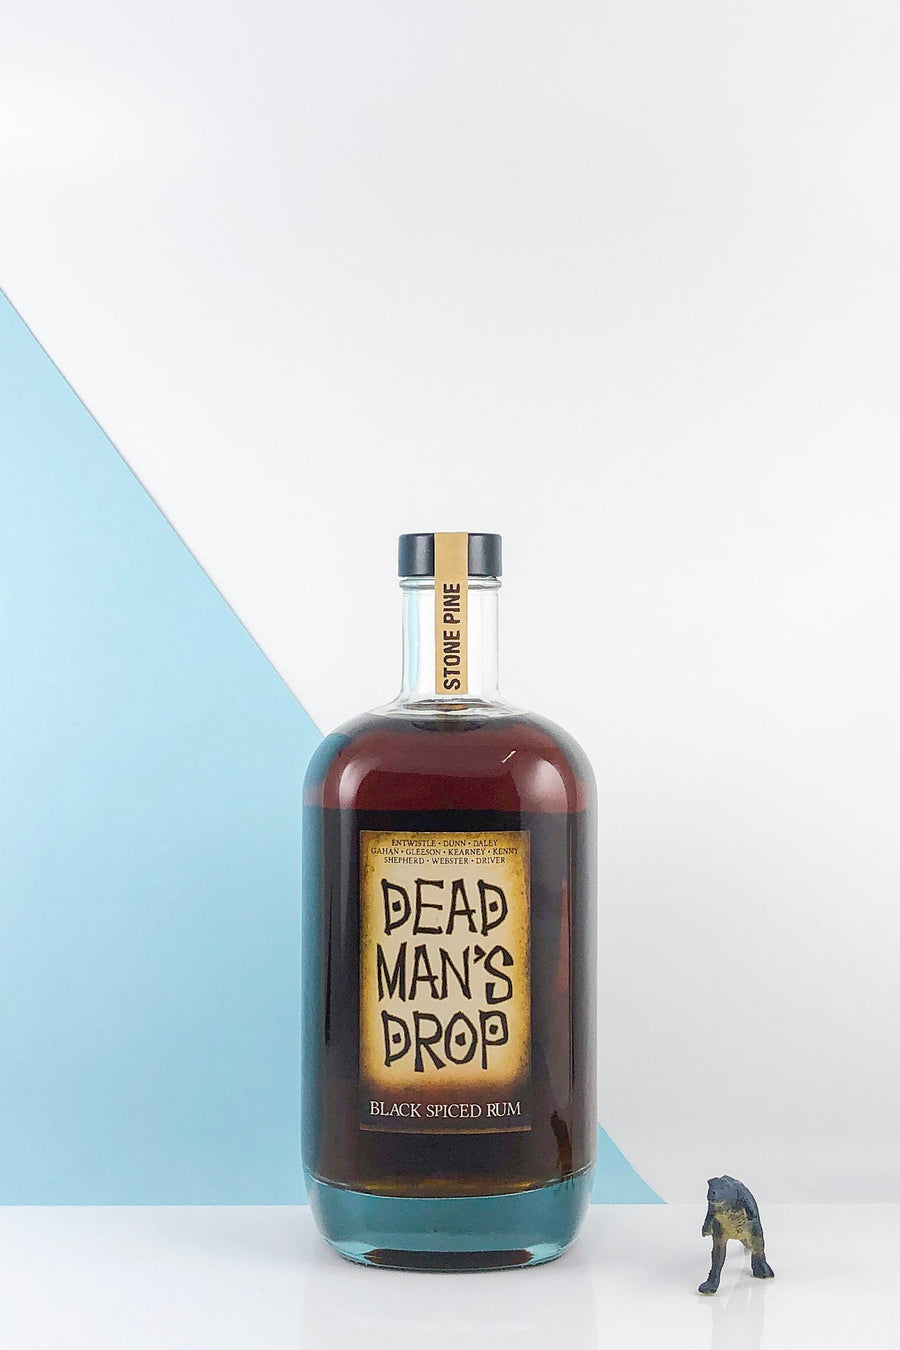 Stone Pine Distillery Dead Man's Drop Black Spiced Rum